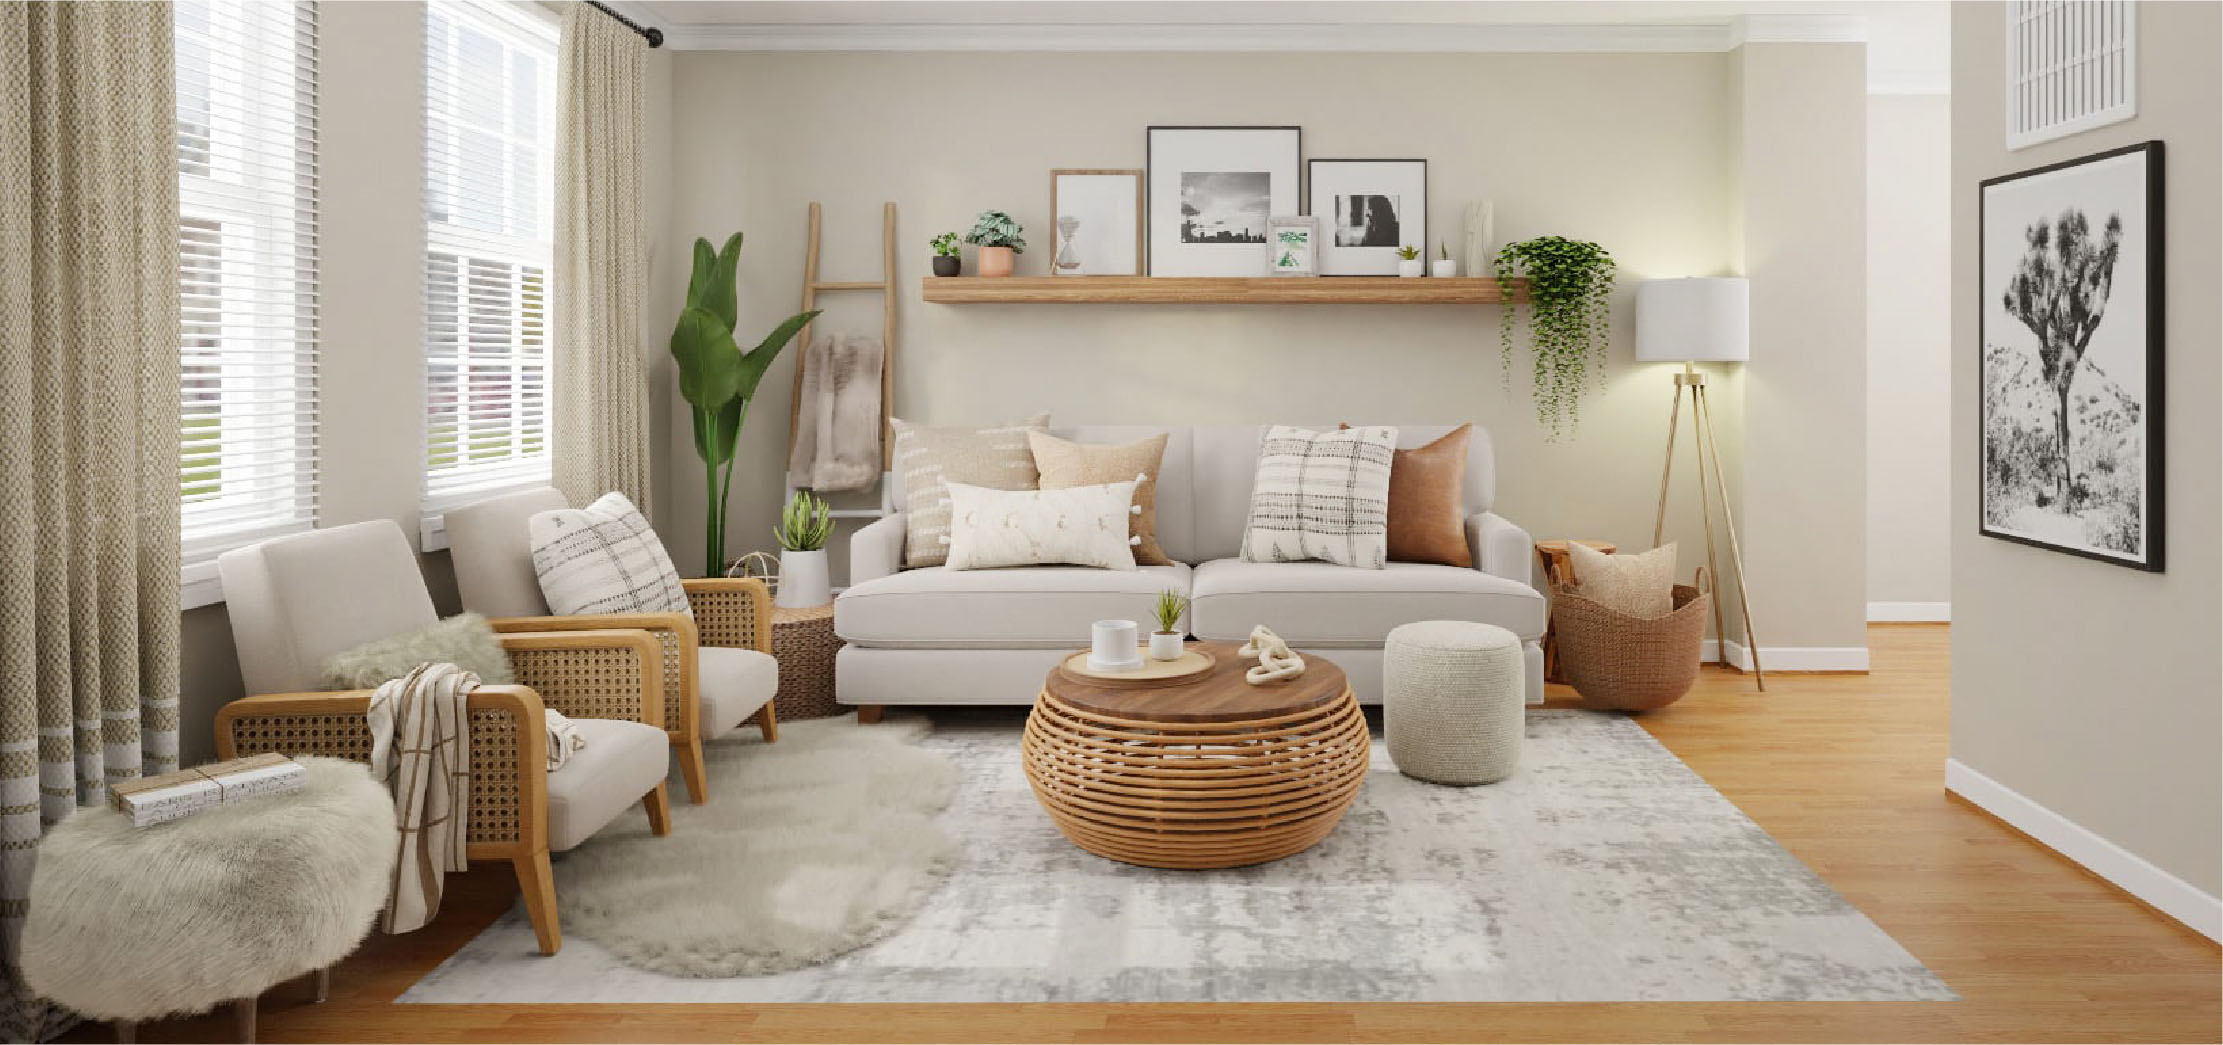 bohemian living room in browns